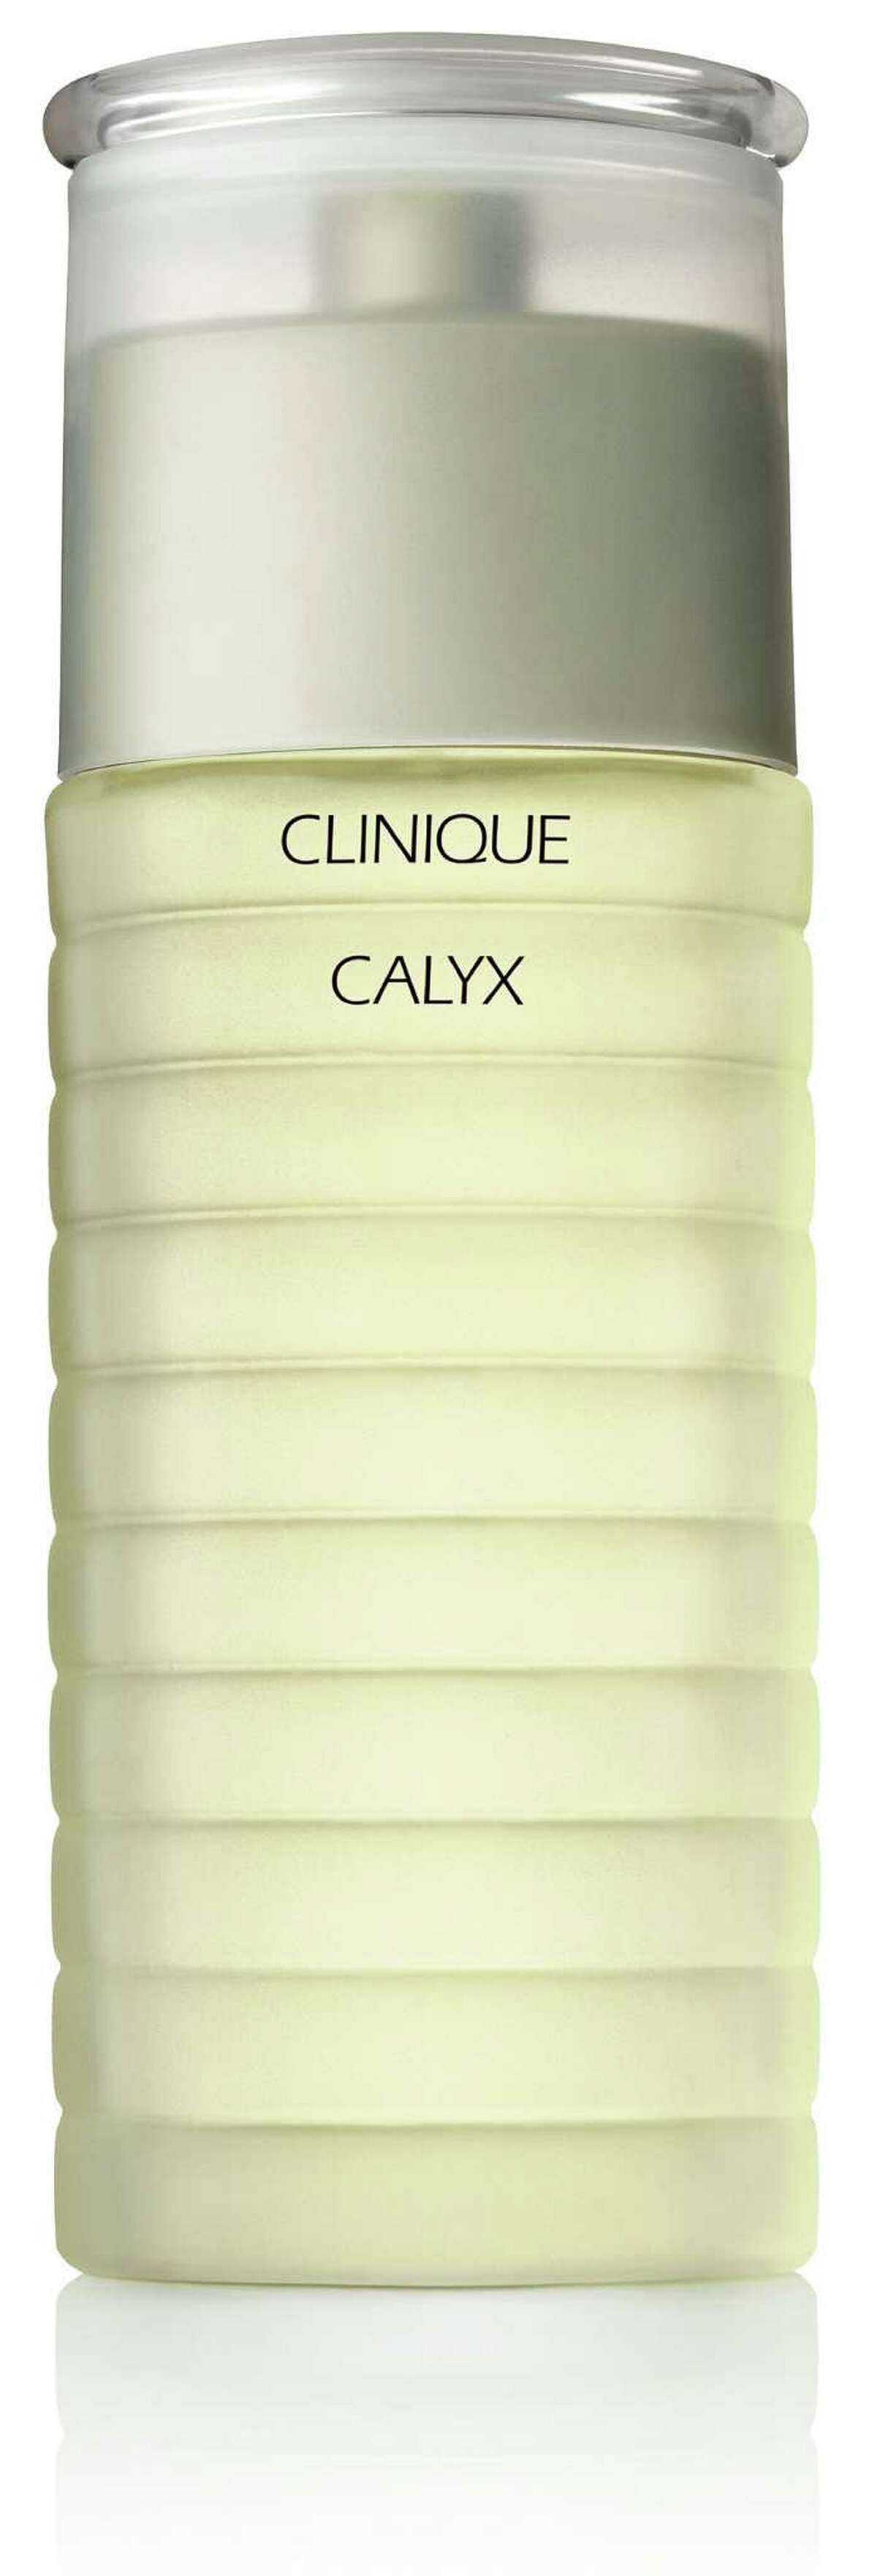 Clinique's Calyx fragrance